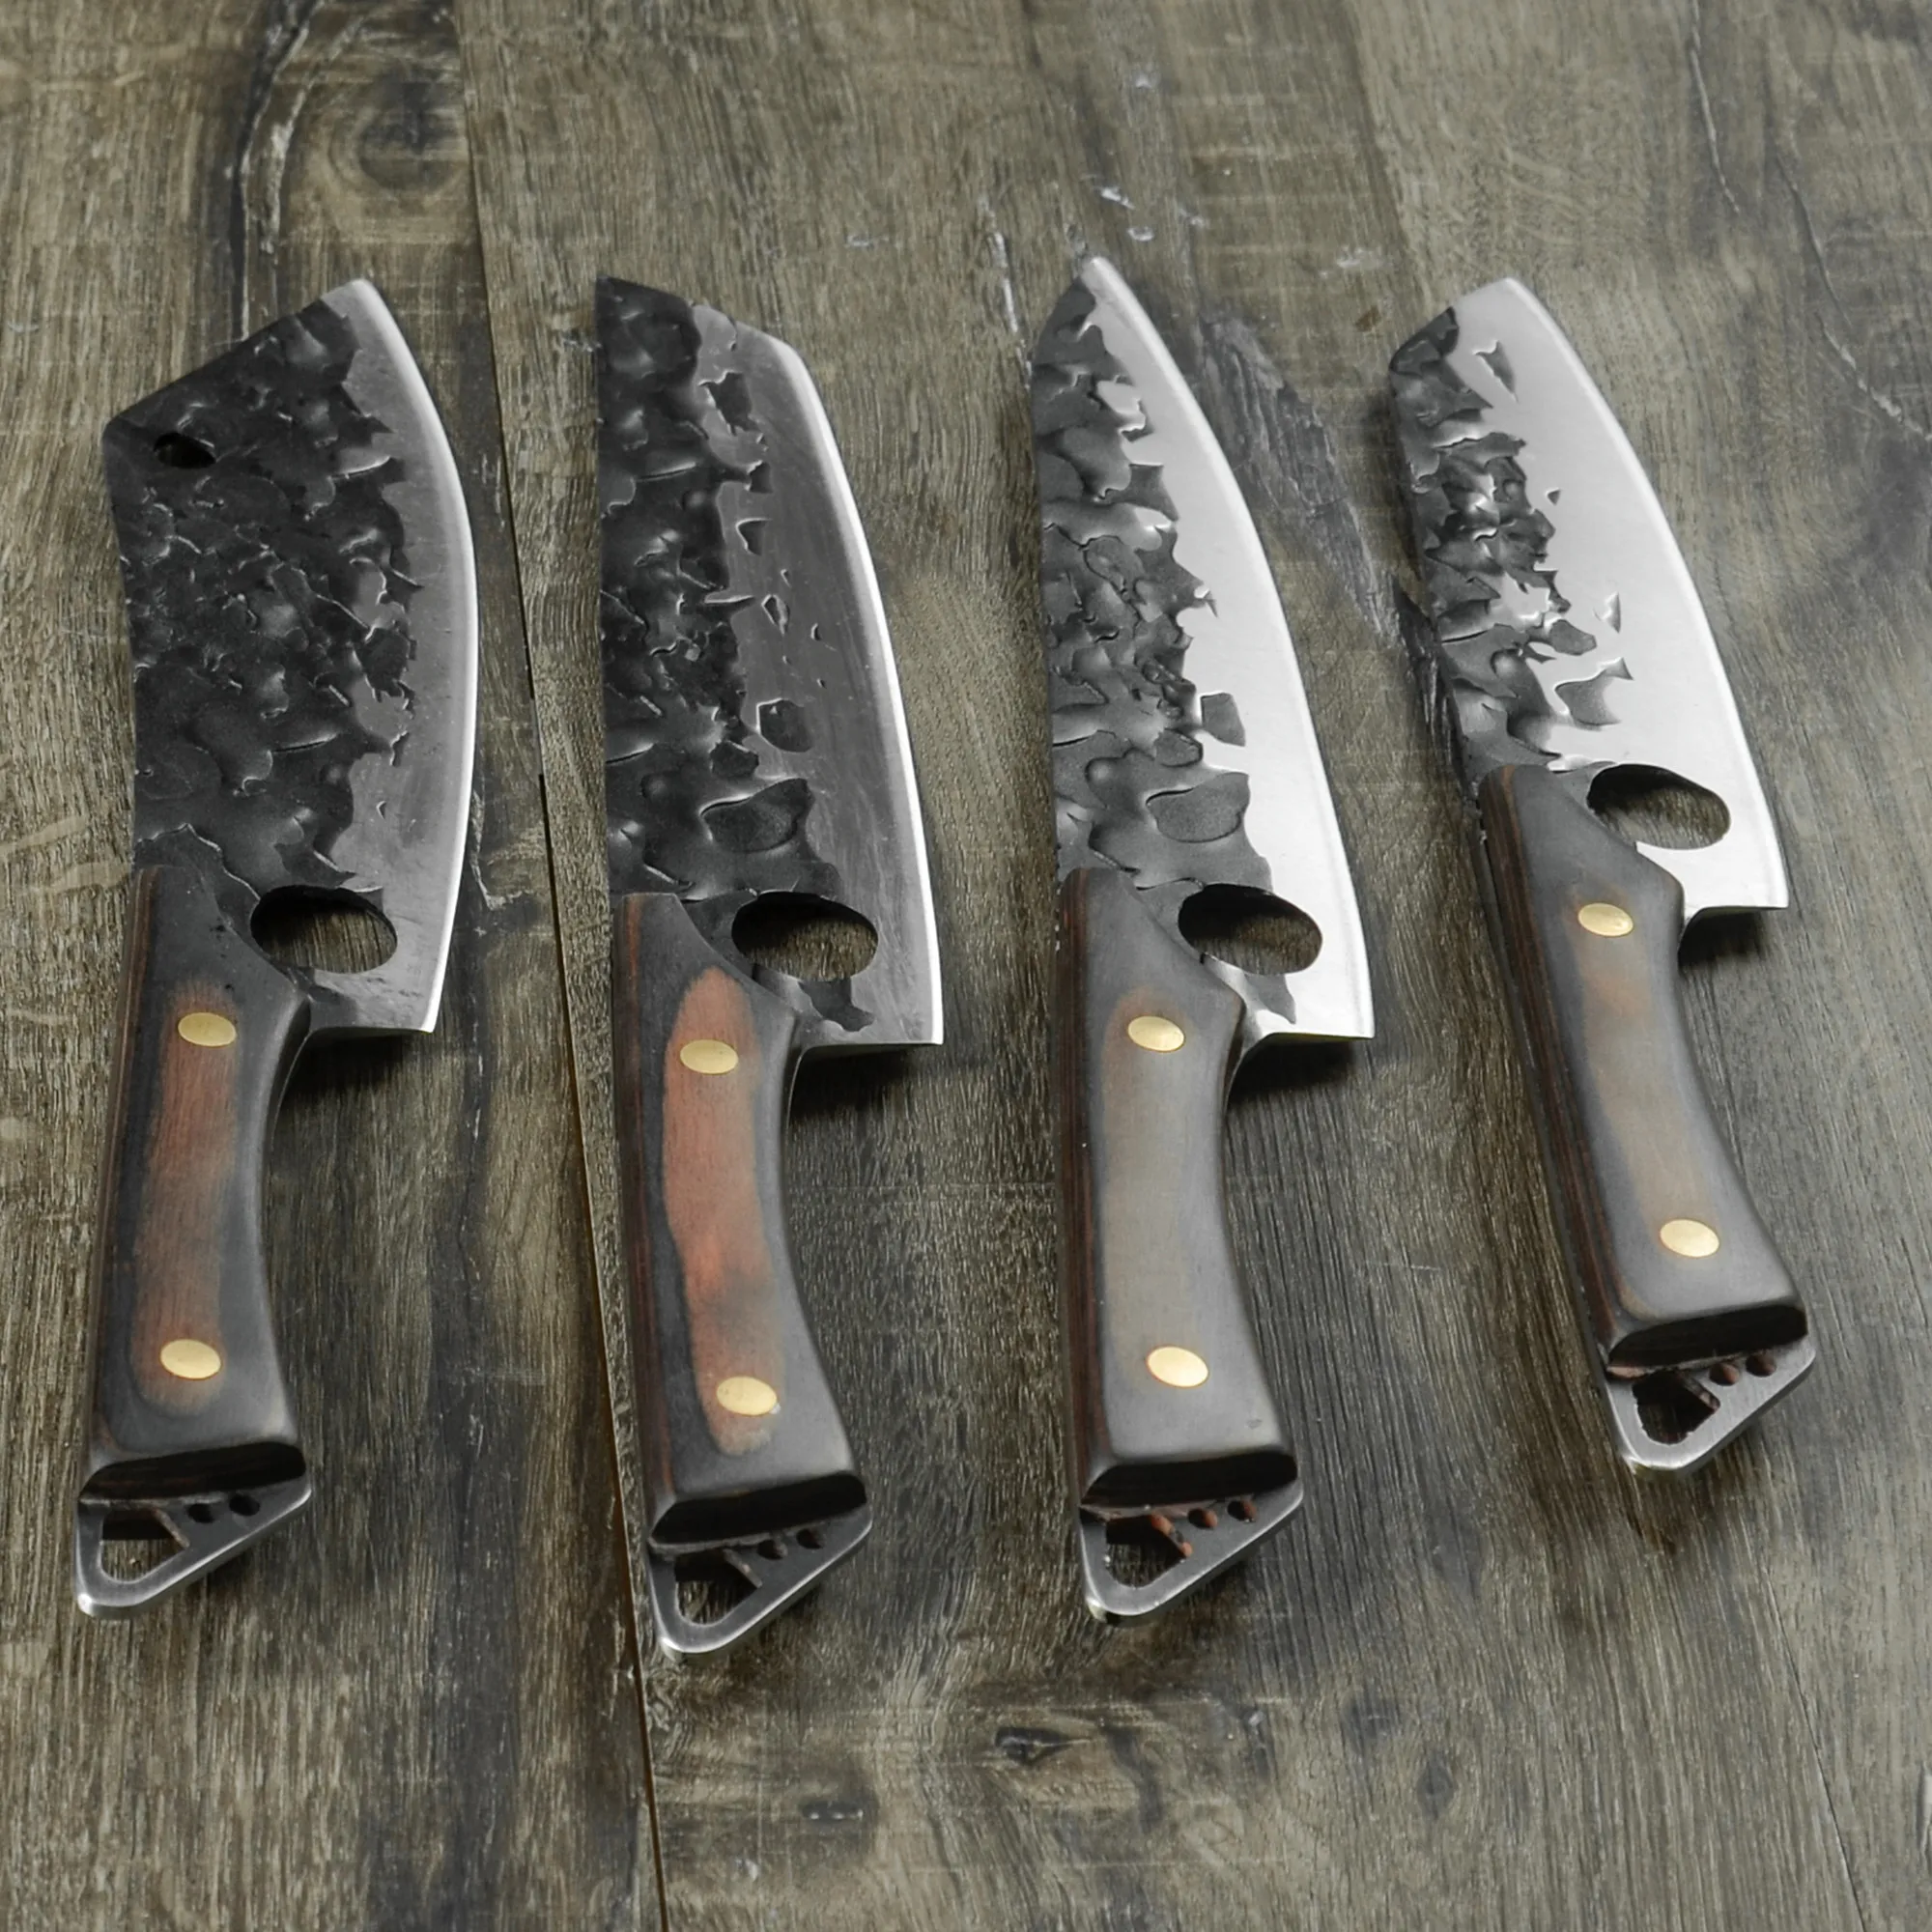 Stainless Steel Knife & Peeler Set,Knife Set with Sheath Covers and Pe —  CHIMIYA